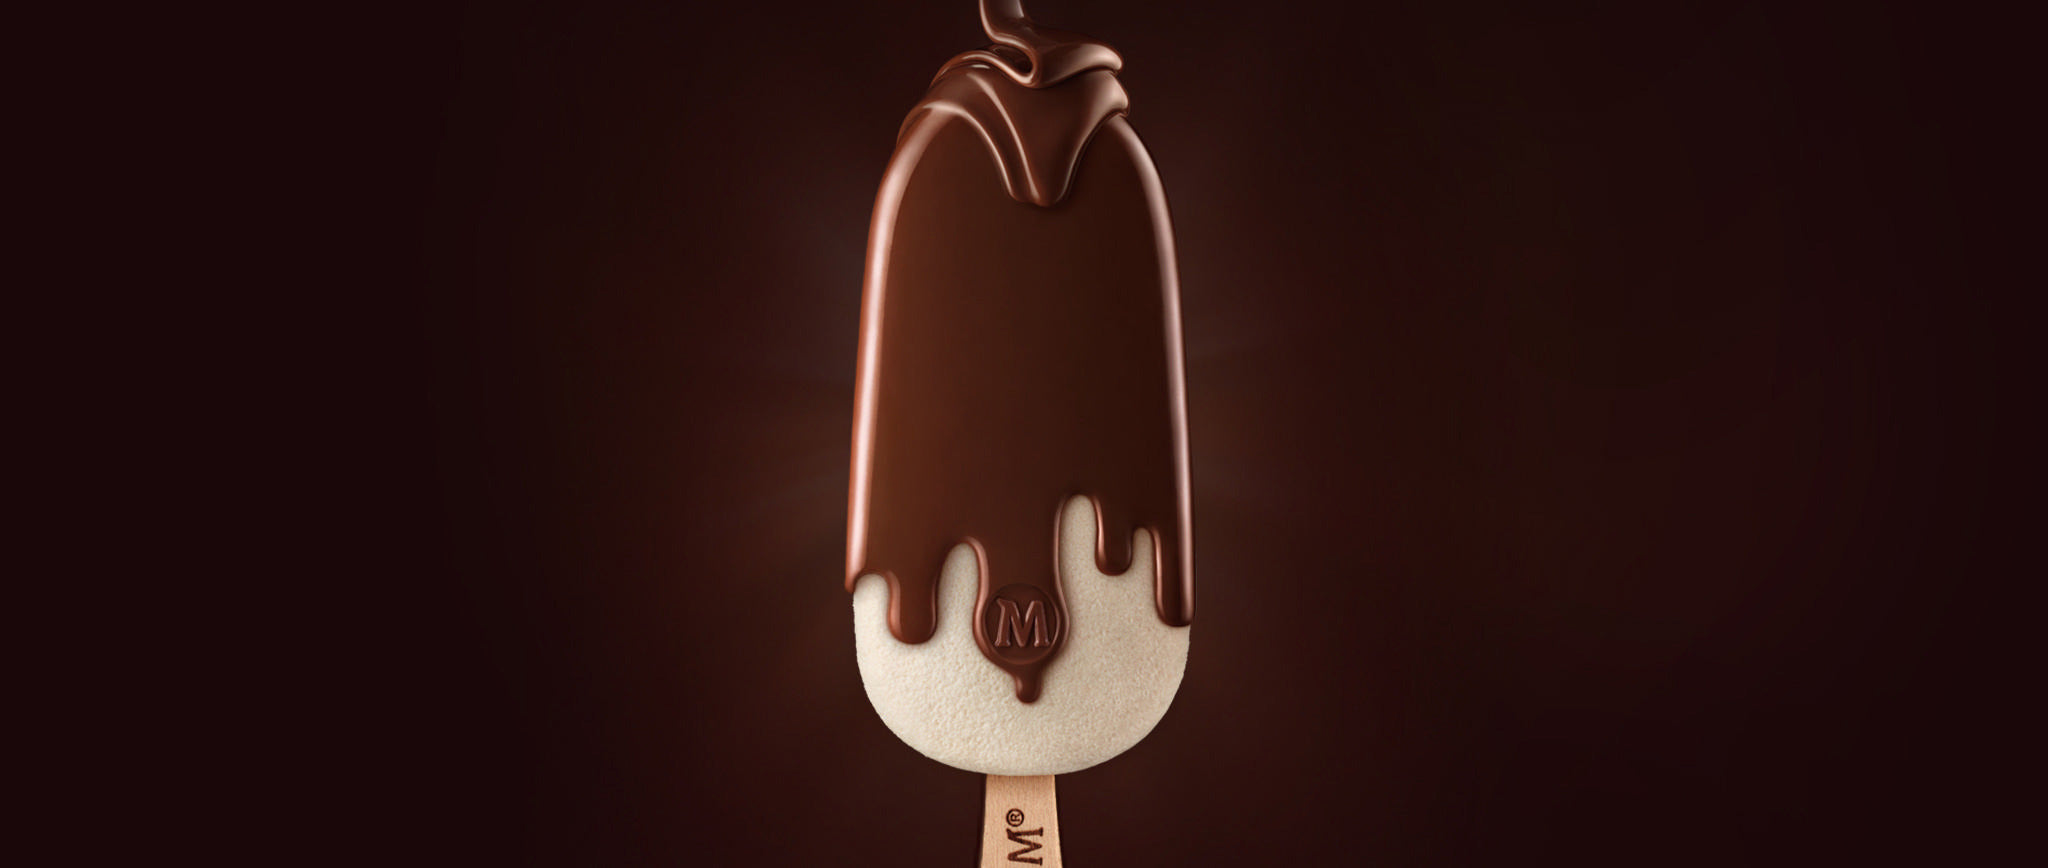 Magnum Classic Ice Cream Bar - Dripping Chocolate Onto Vanilla Ice Cream